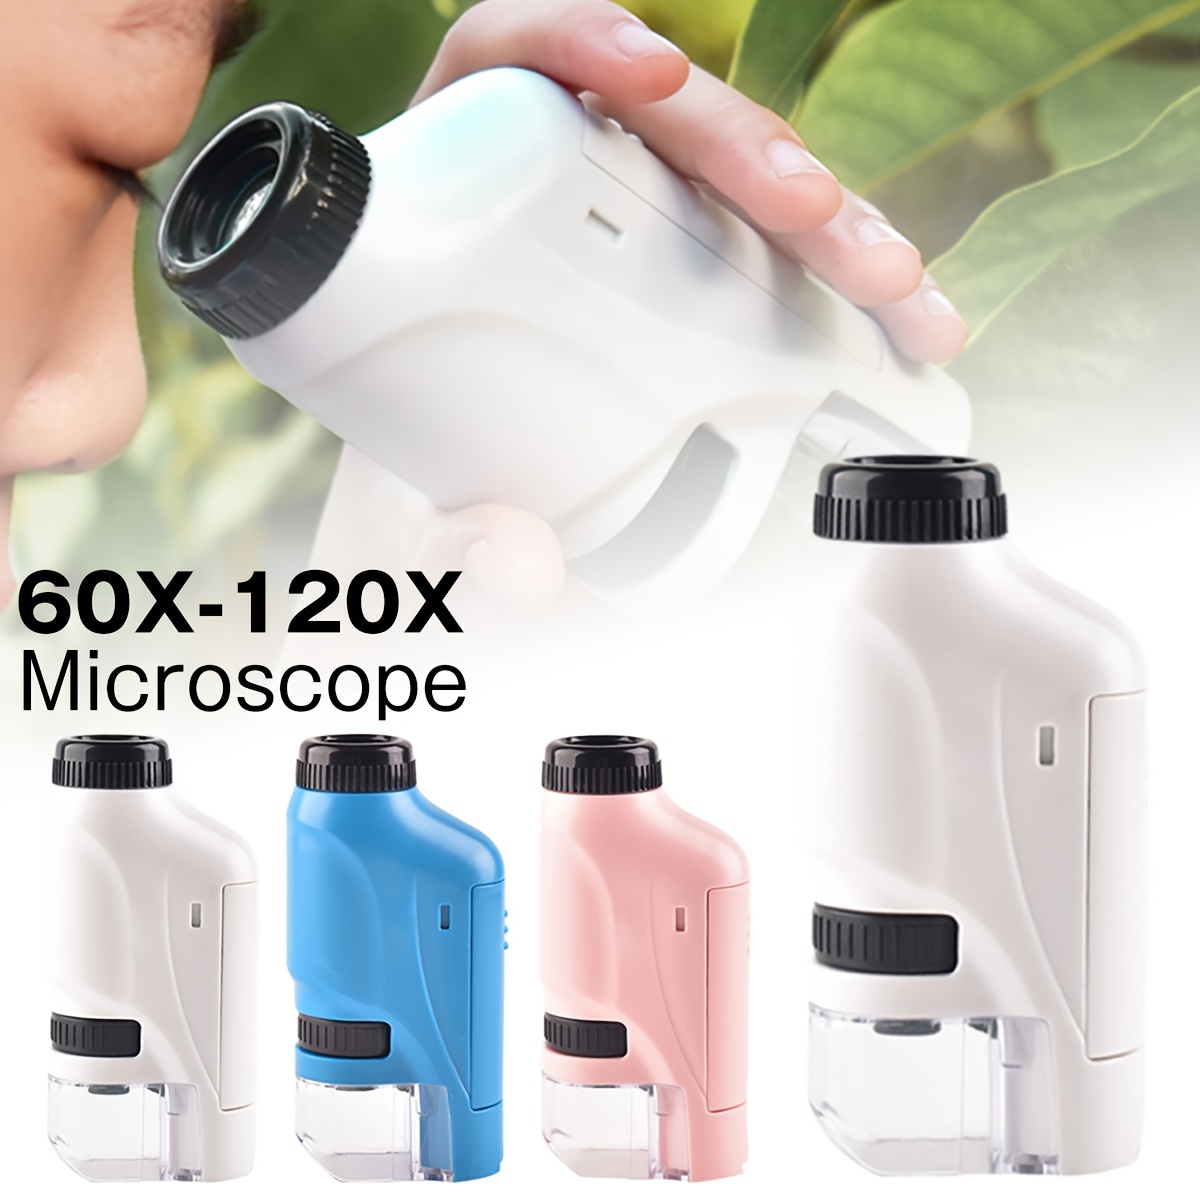 Mini Pocket Microscope Kit 60X-120X Handheld Microscope with LED